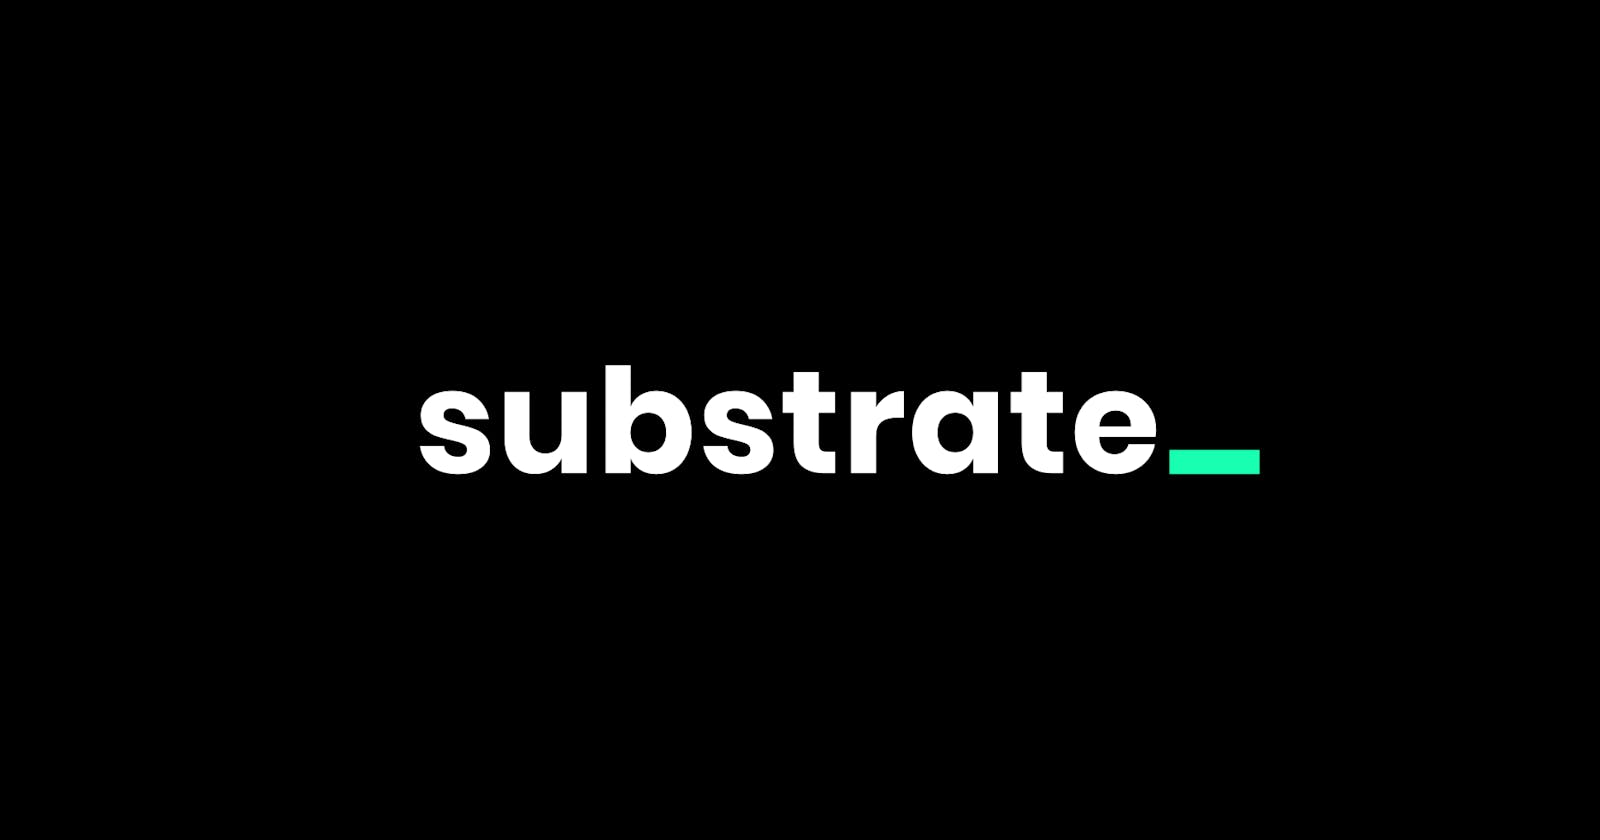 [Tự học Substrate #1] Chuỗi Substrate Chain - Giới thiệu